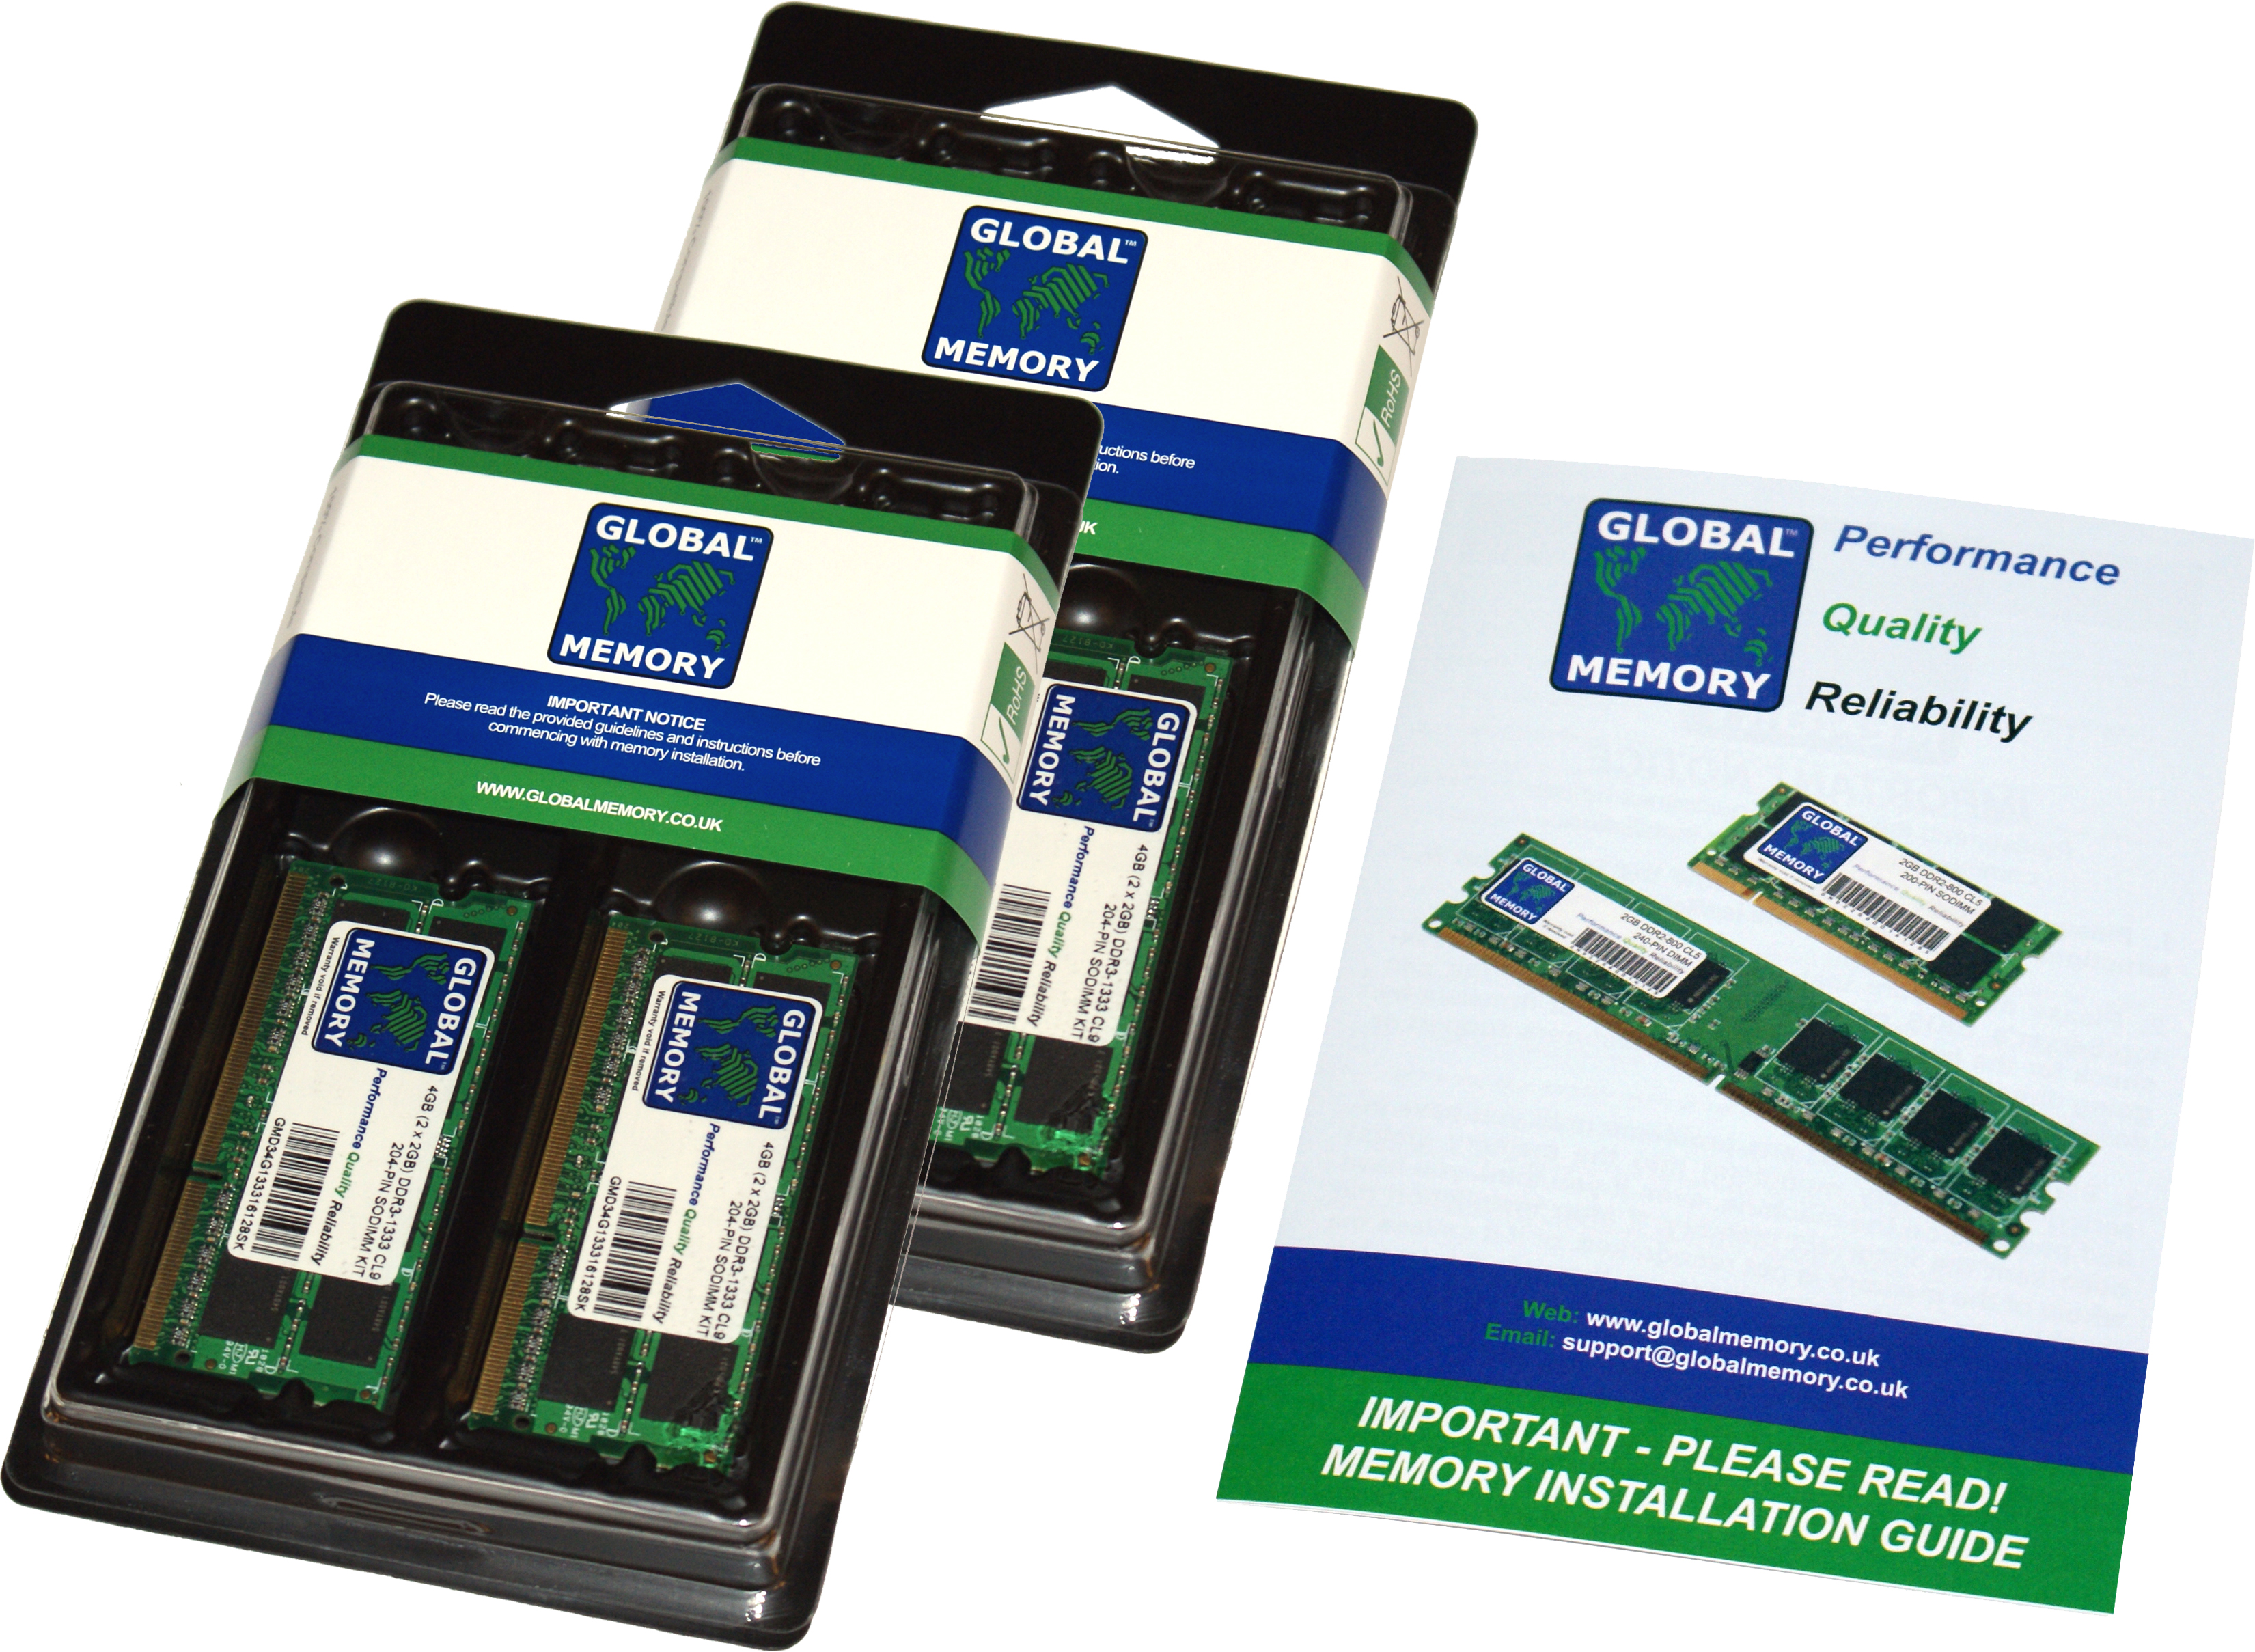 64GB (4 x 16GB) DDR4 2933MHz PC4-23400 260-PIN SODIMM MEMORY RAM KIT FOR SAMSUNG LAPTOPS/NOTEBOOKS